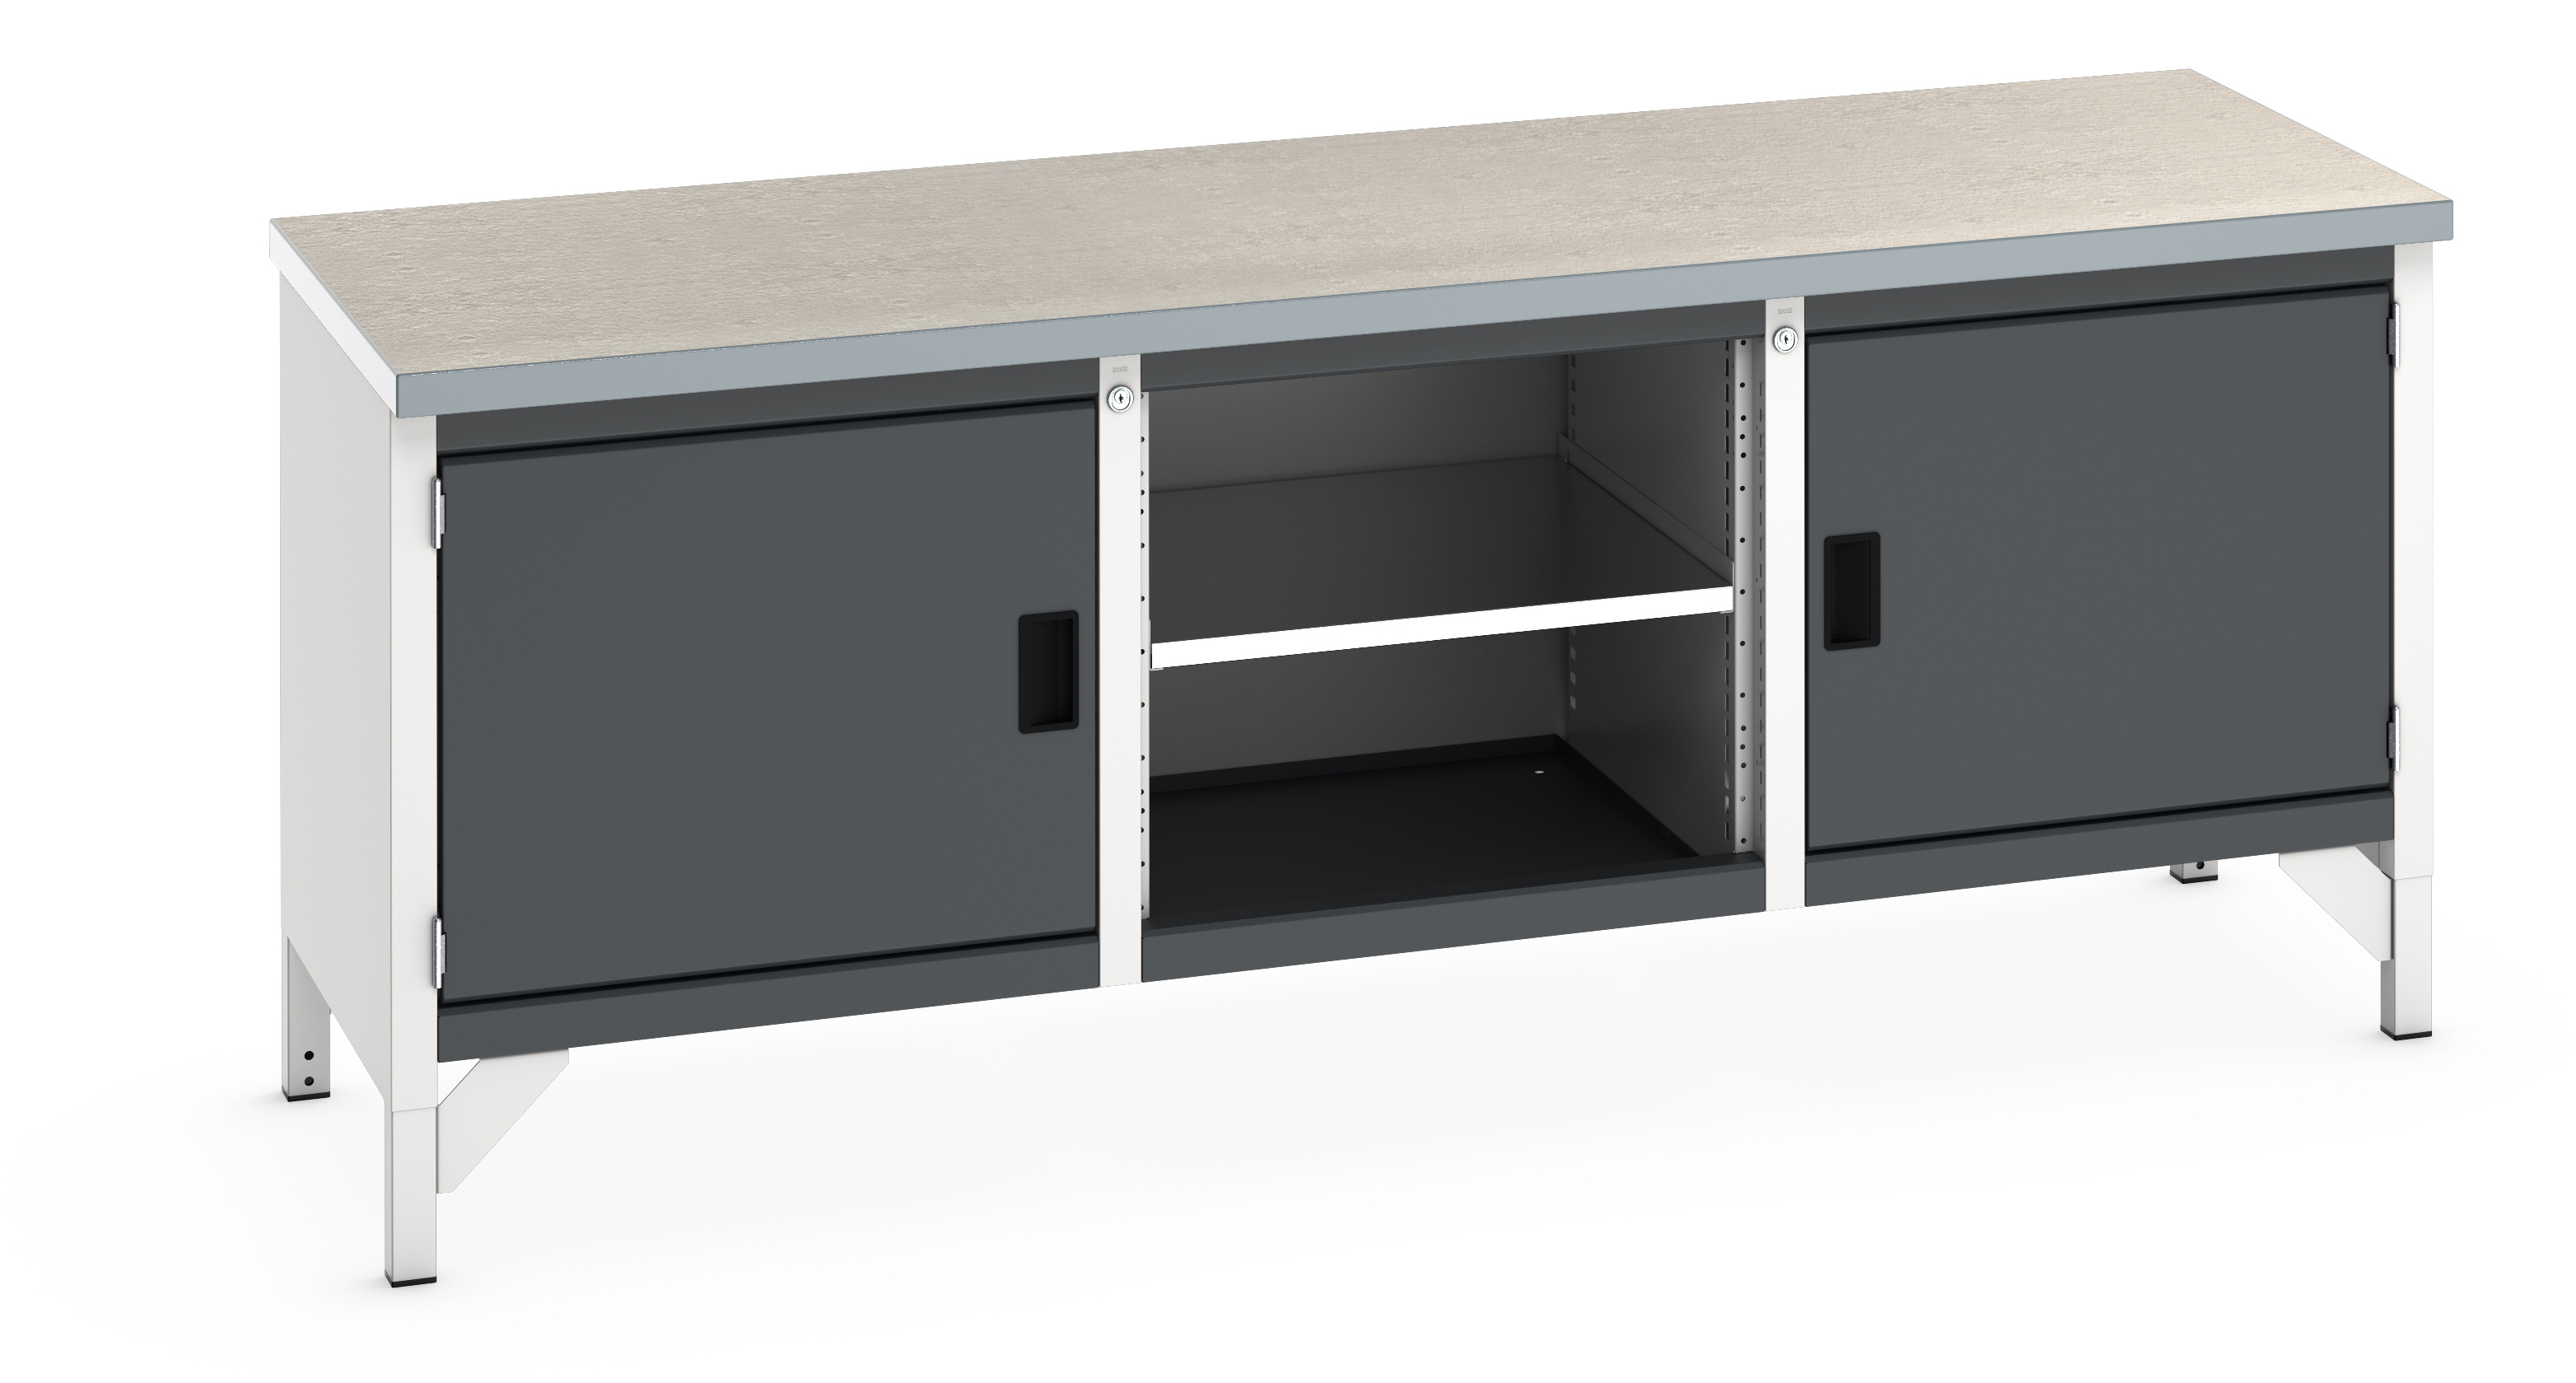 Bott Cubio Storage Bench With Full Cupboard / Open Cupboard / Full Cupboard - 41002051.19V